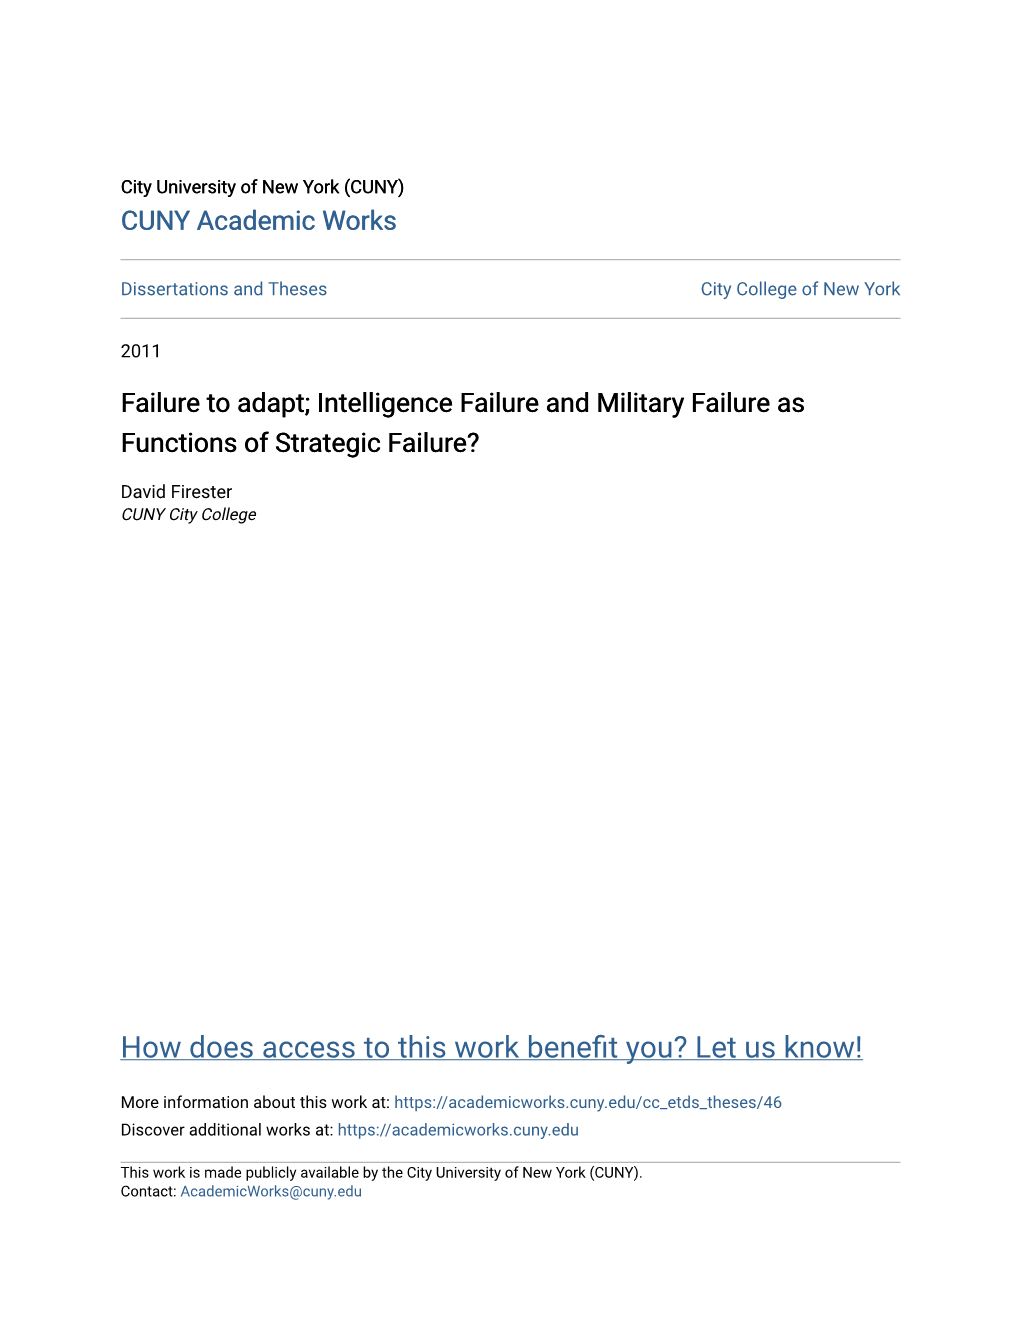 Intelligence Failure and Military Failure As Functions of Strategic Failure?